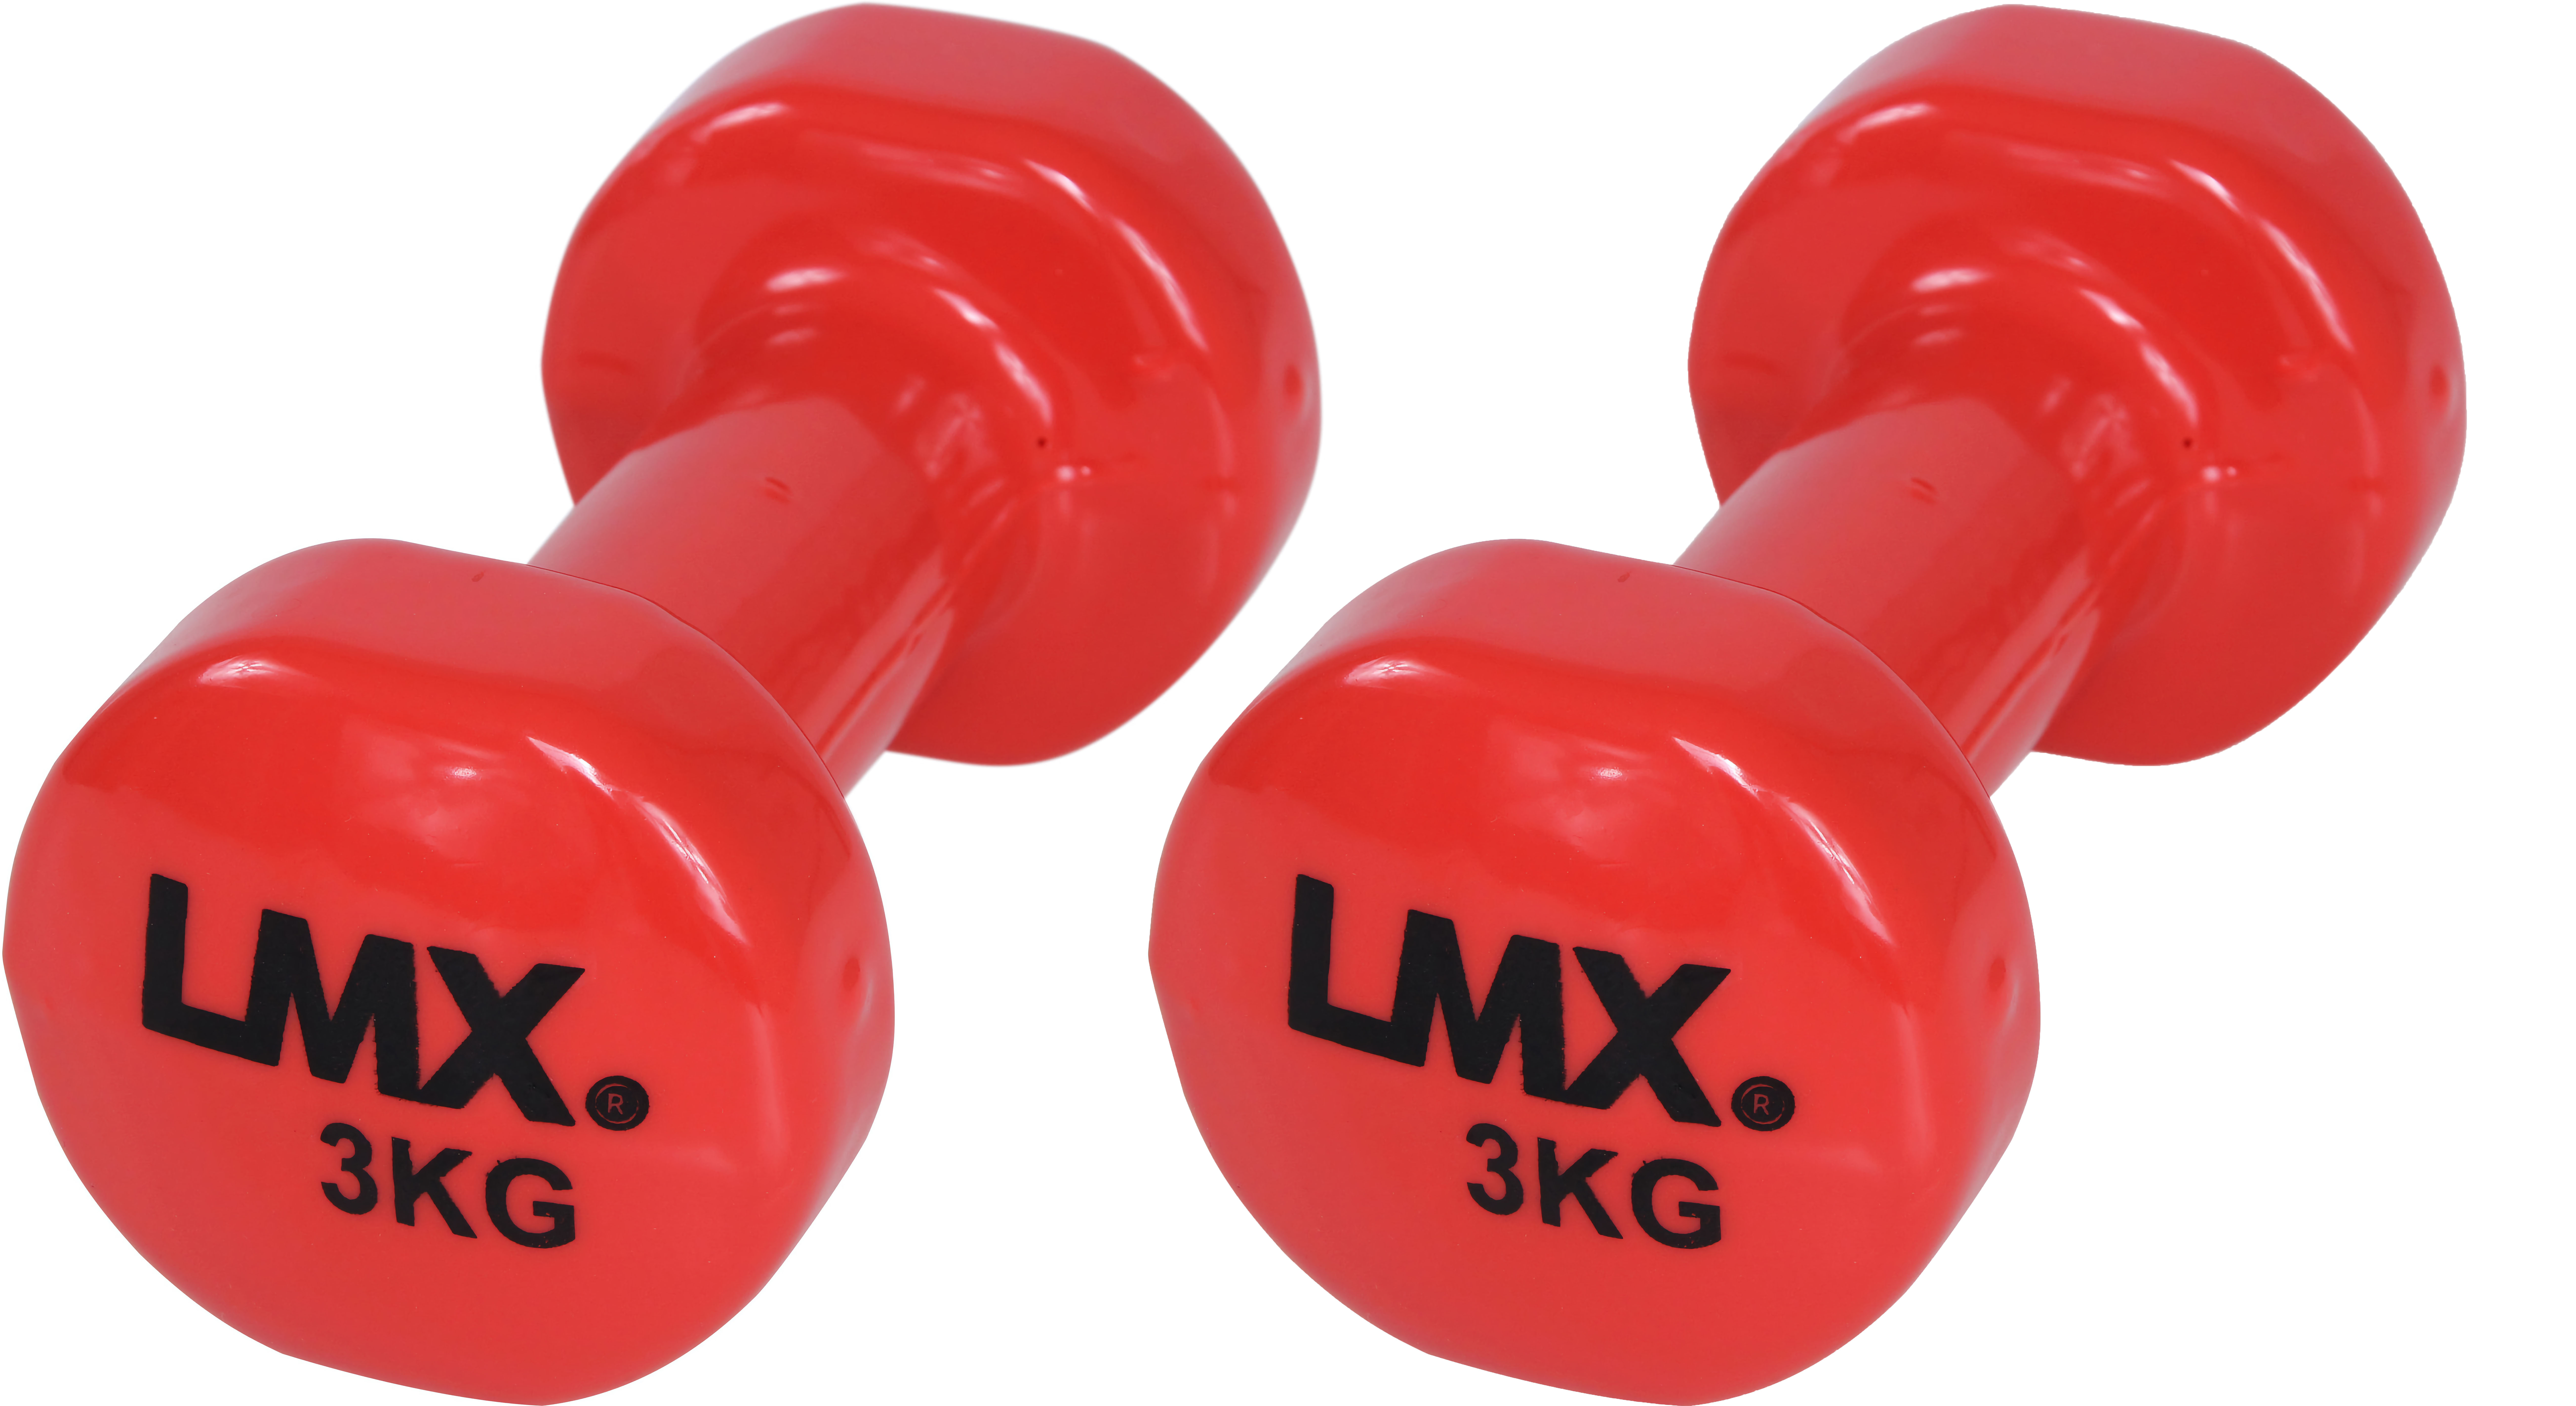 LMX. Vinyl Håndvægtsæt 3 kg Red